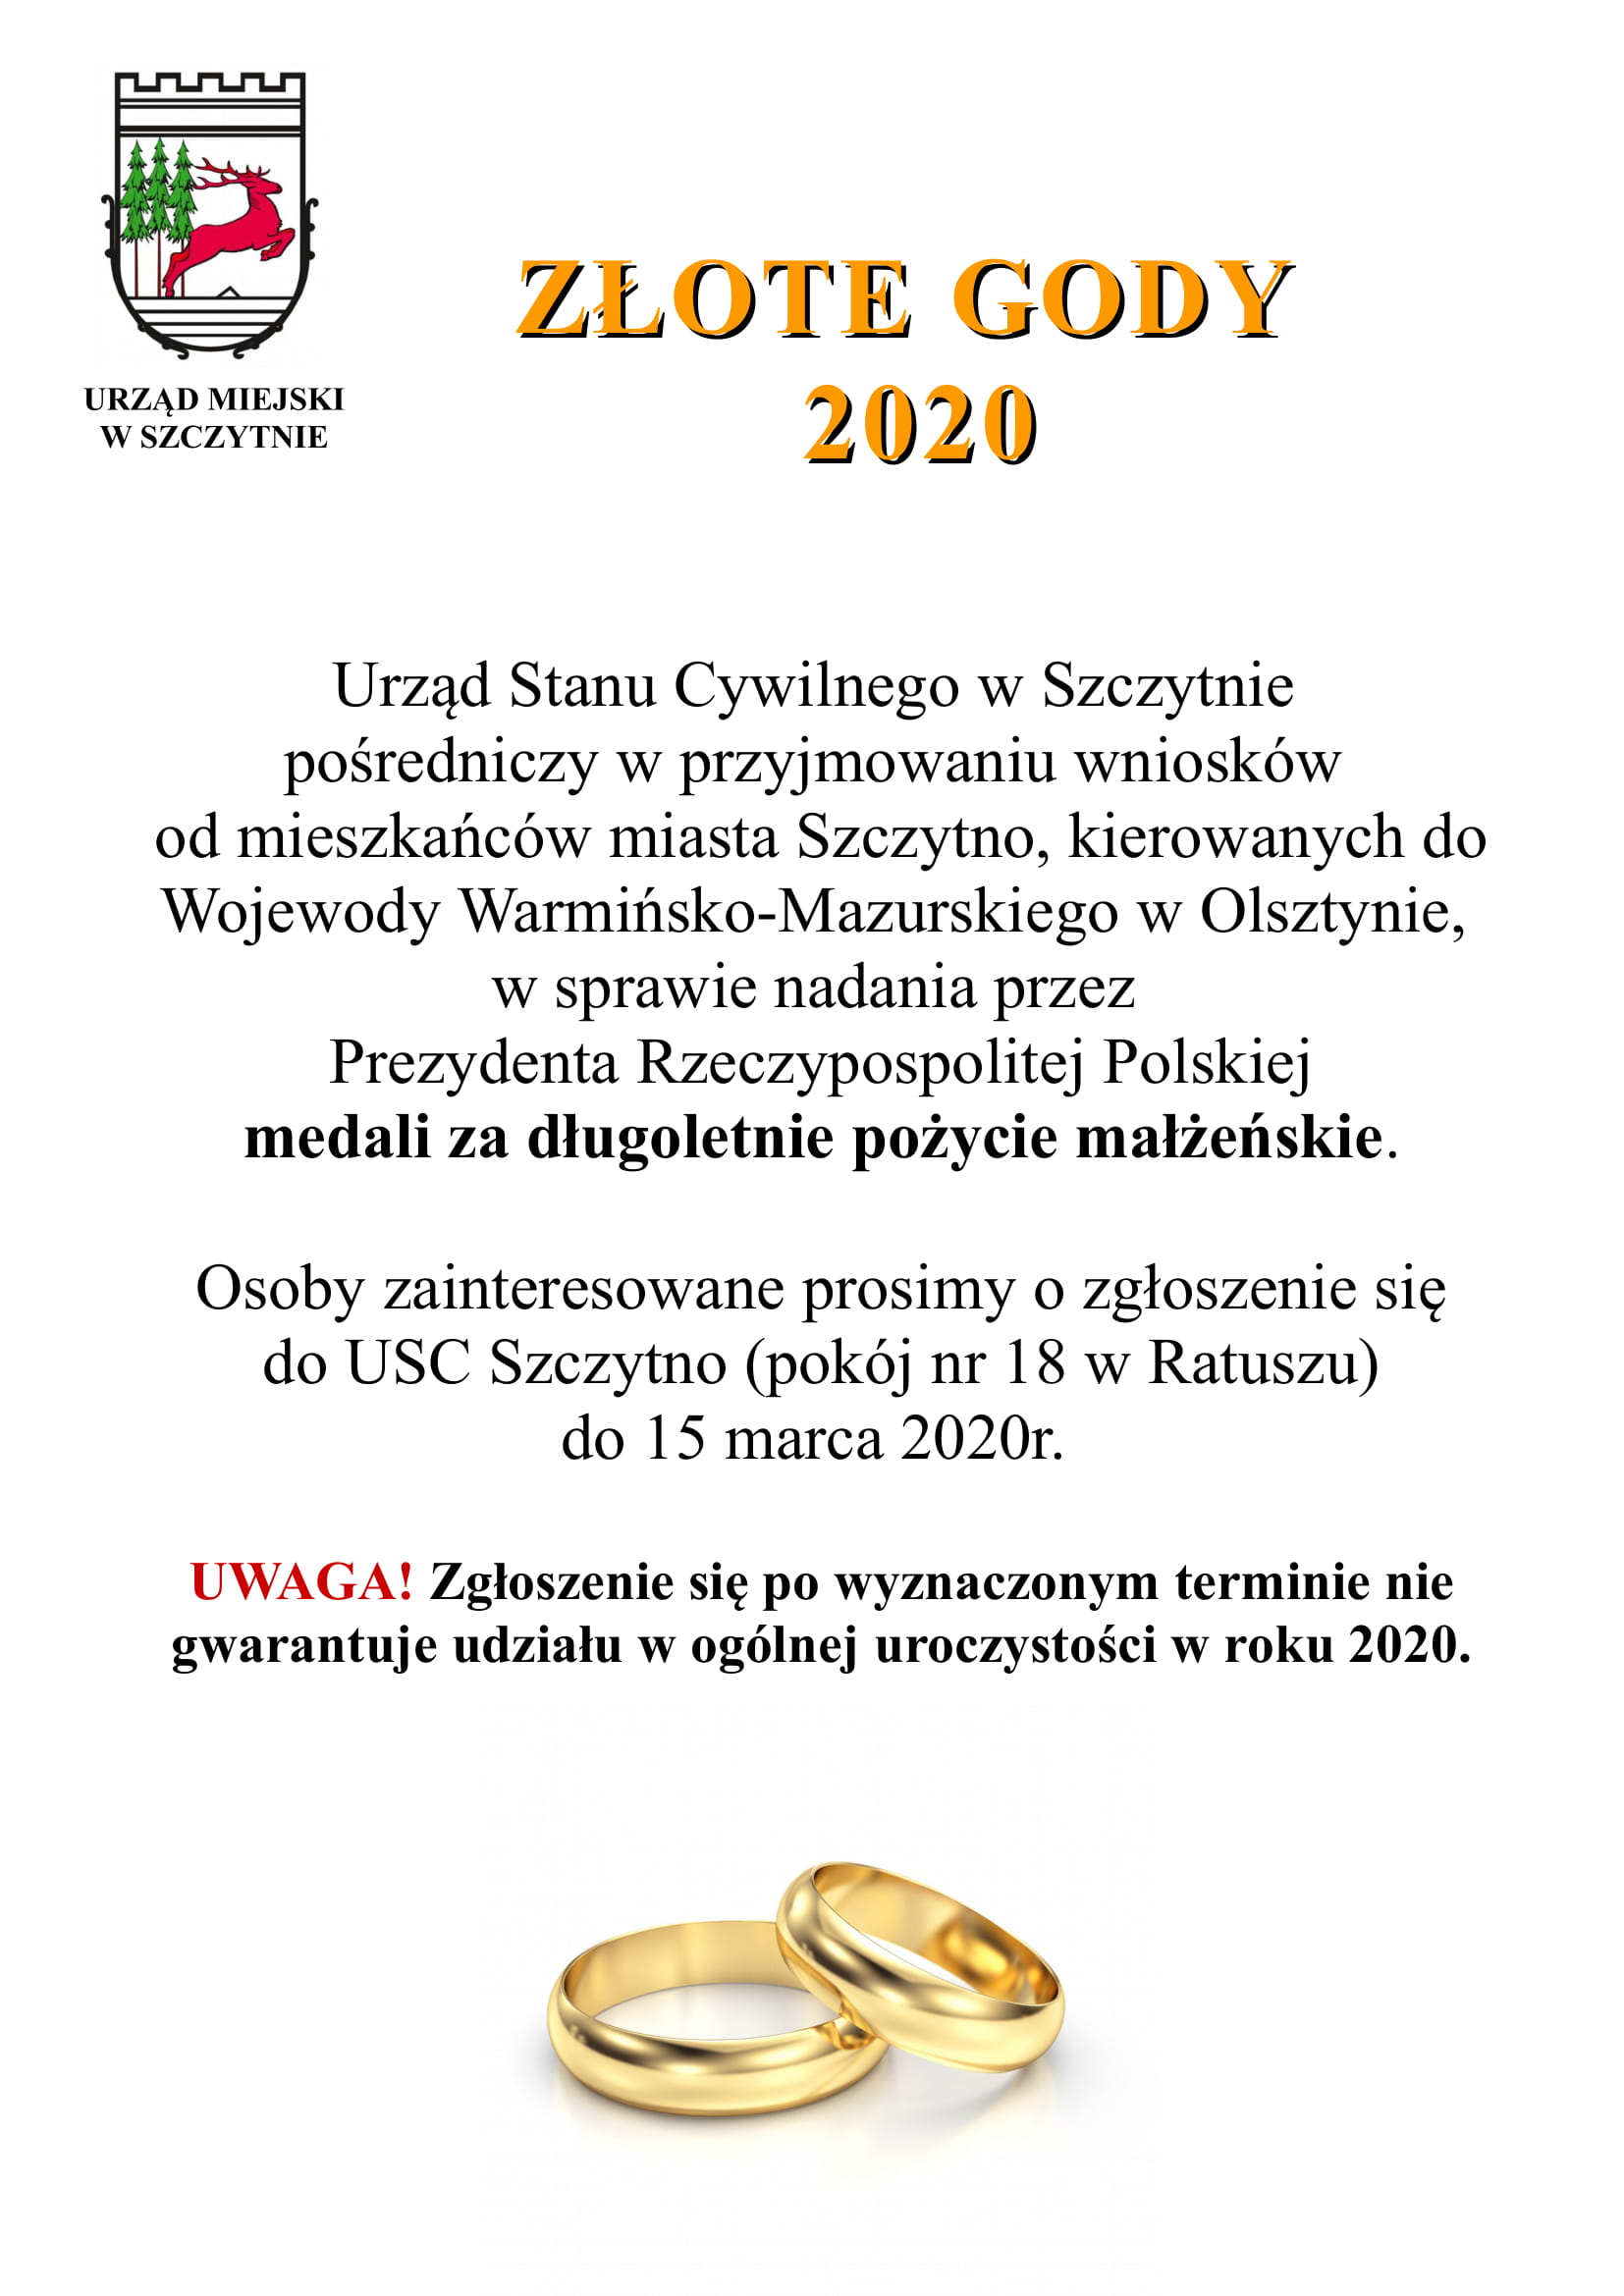 https://m.powiatszczycienski.pl/2020/01/orig/plakat-zlote-gody-1-27434.jpg